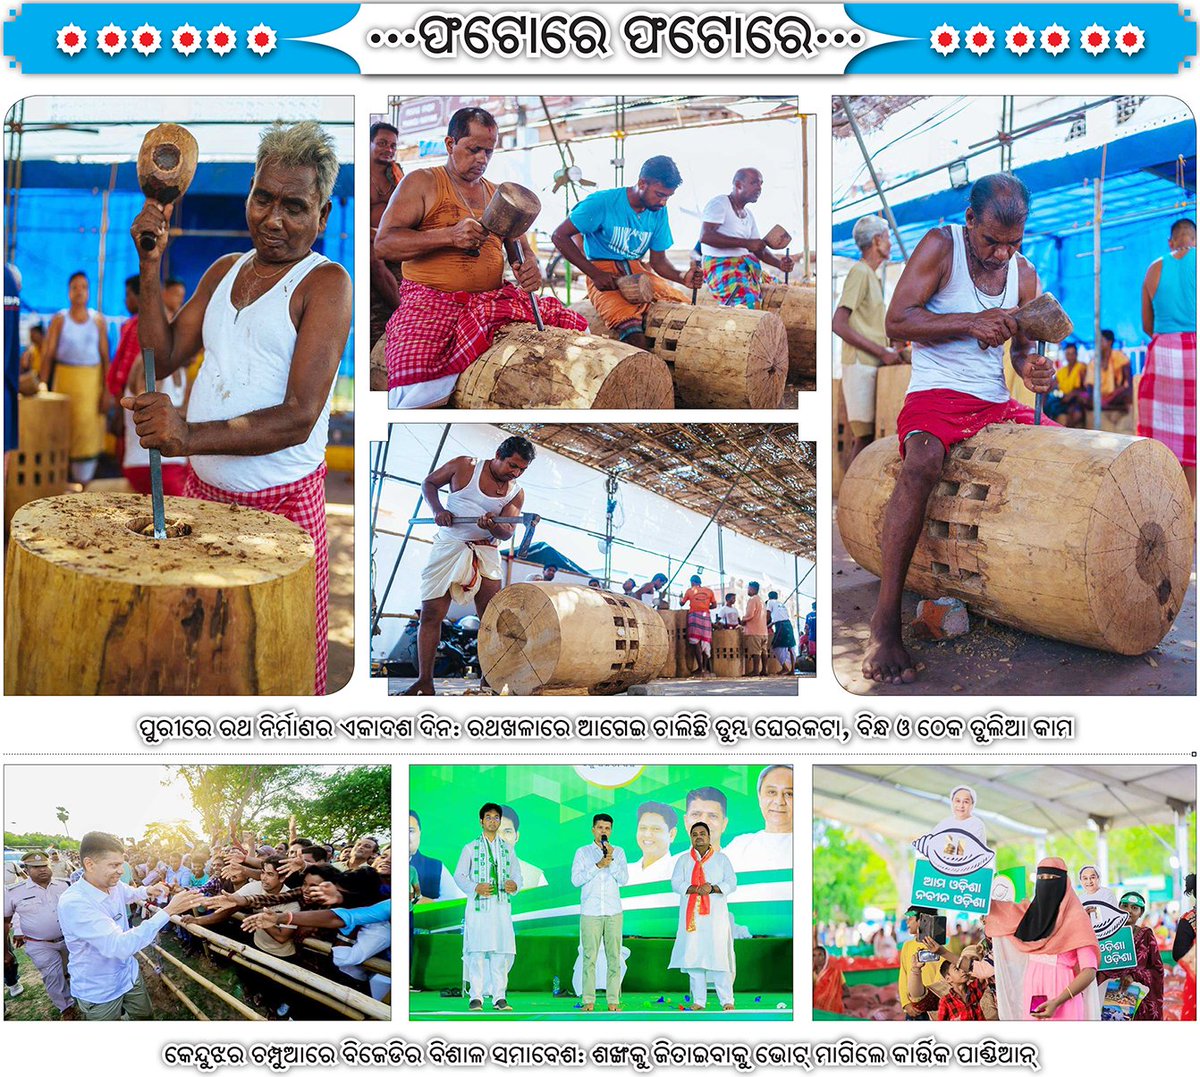 ପୁରୀରେ ରଥ ନିର୍ମାଣର ଏକାଦଶ ଦିନ: ରଥଖଳାରେ ଆଗେଇ ଚାଲିଛି ତୁମ୍ବ ଘେରକଟା, ବିନ୍ଧ ଓ ଠେକ ତୁଲିଆ କାମ
#rathyatra #puri #odisha #odishanewsepaper #ଓଡ଼ିଶା_ନ୍ୟୁଜ_ଇପେପର